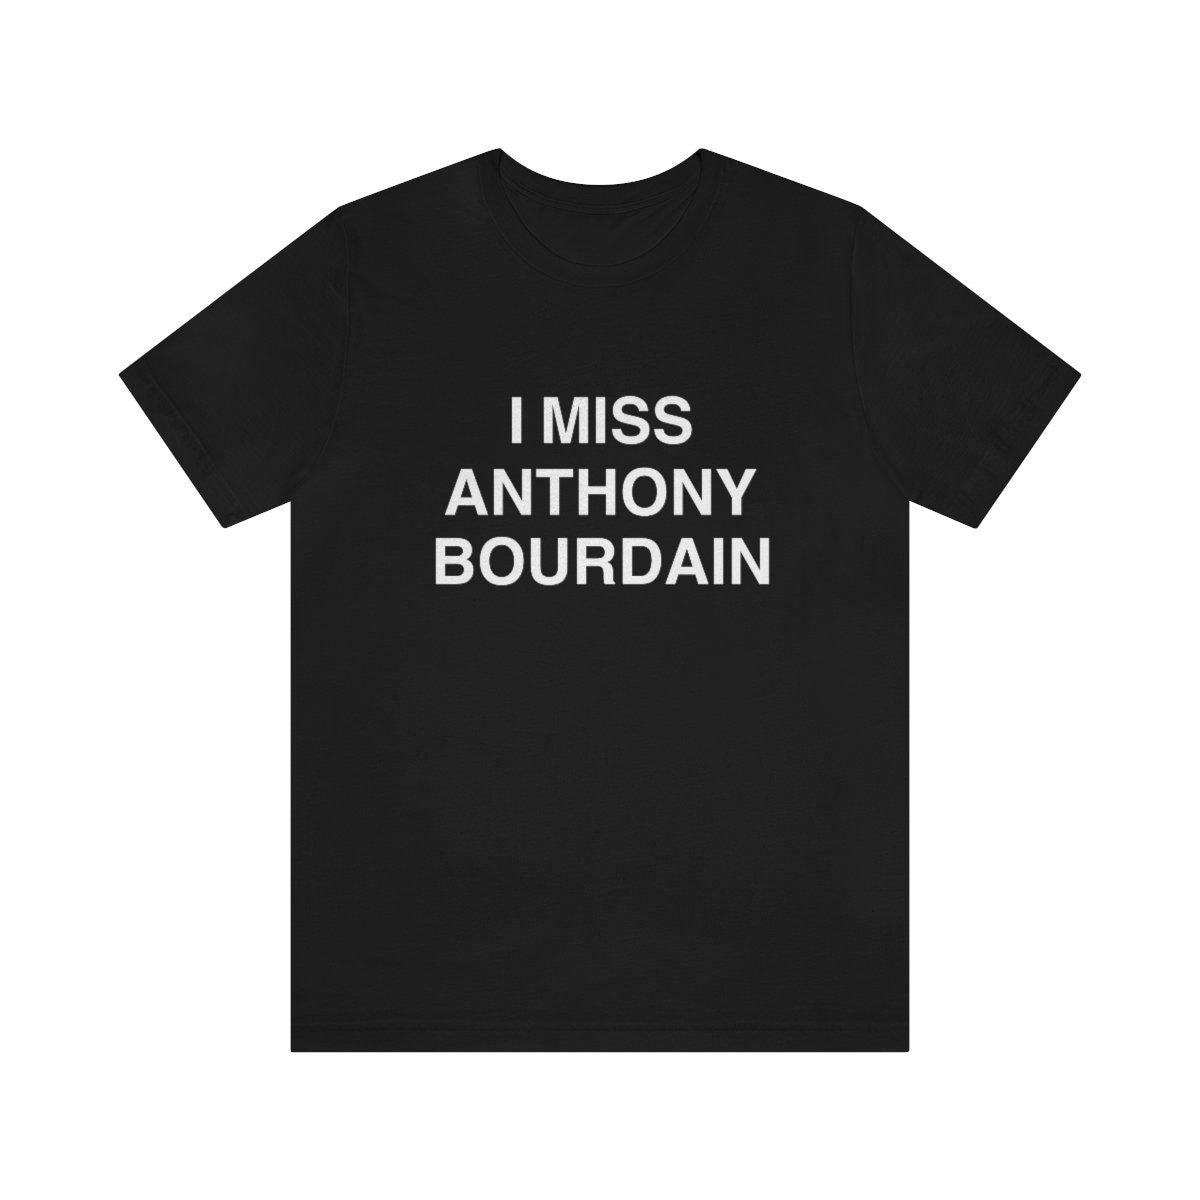 Discover Maglietta T-Shirt MI MANCA Anthony Bourdain Uomo Donna Bambini